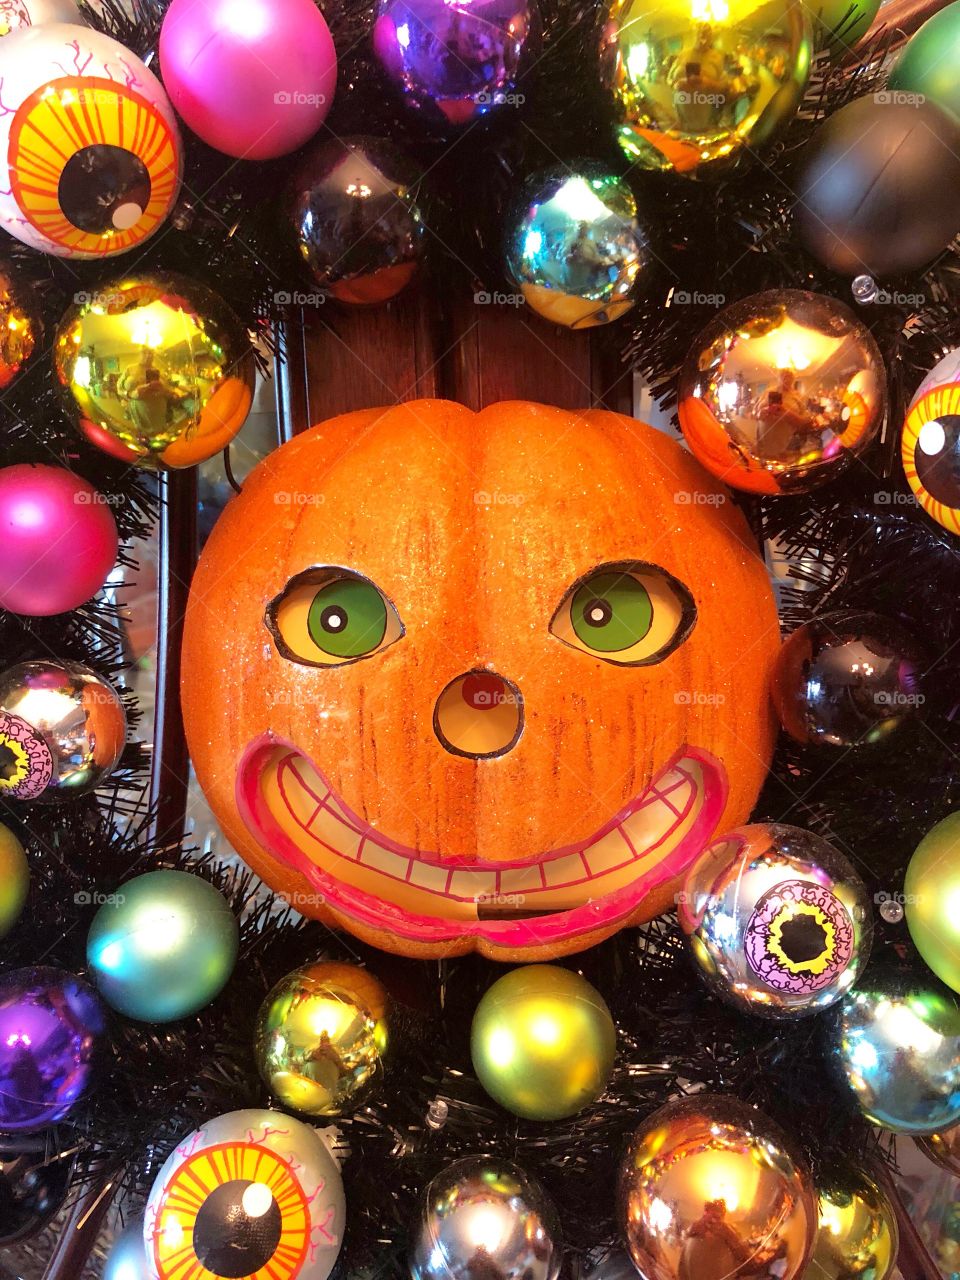 Spooky Halloween decorations. 